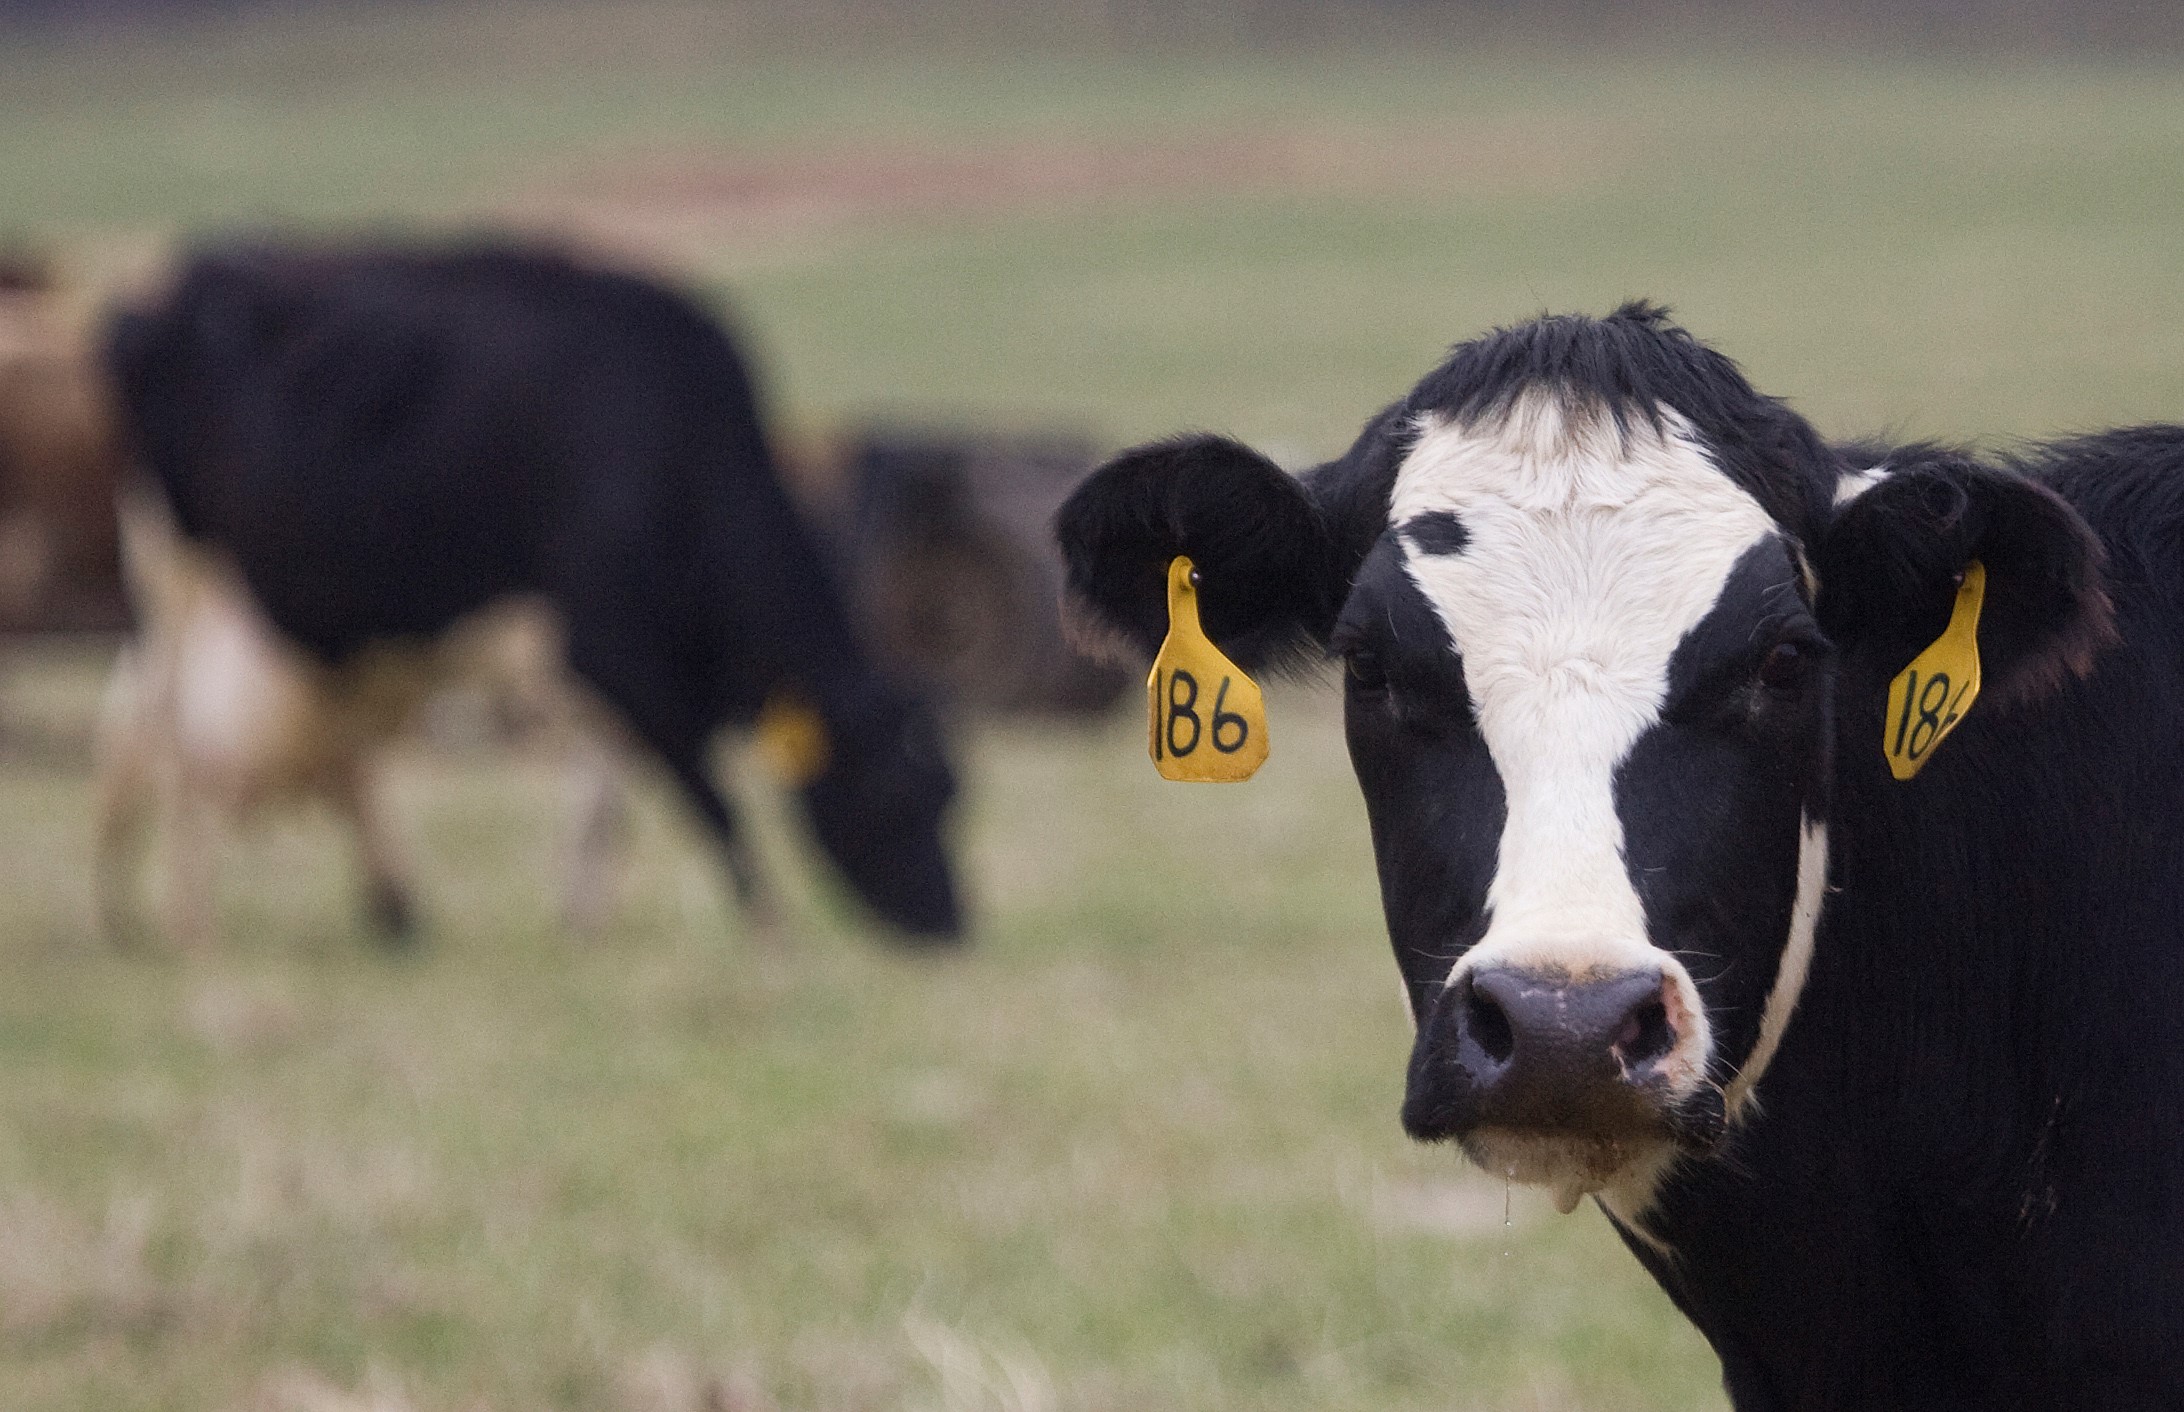 USDA requiring avian flu testing in some dairy cows